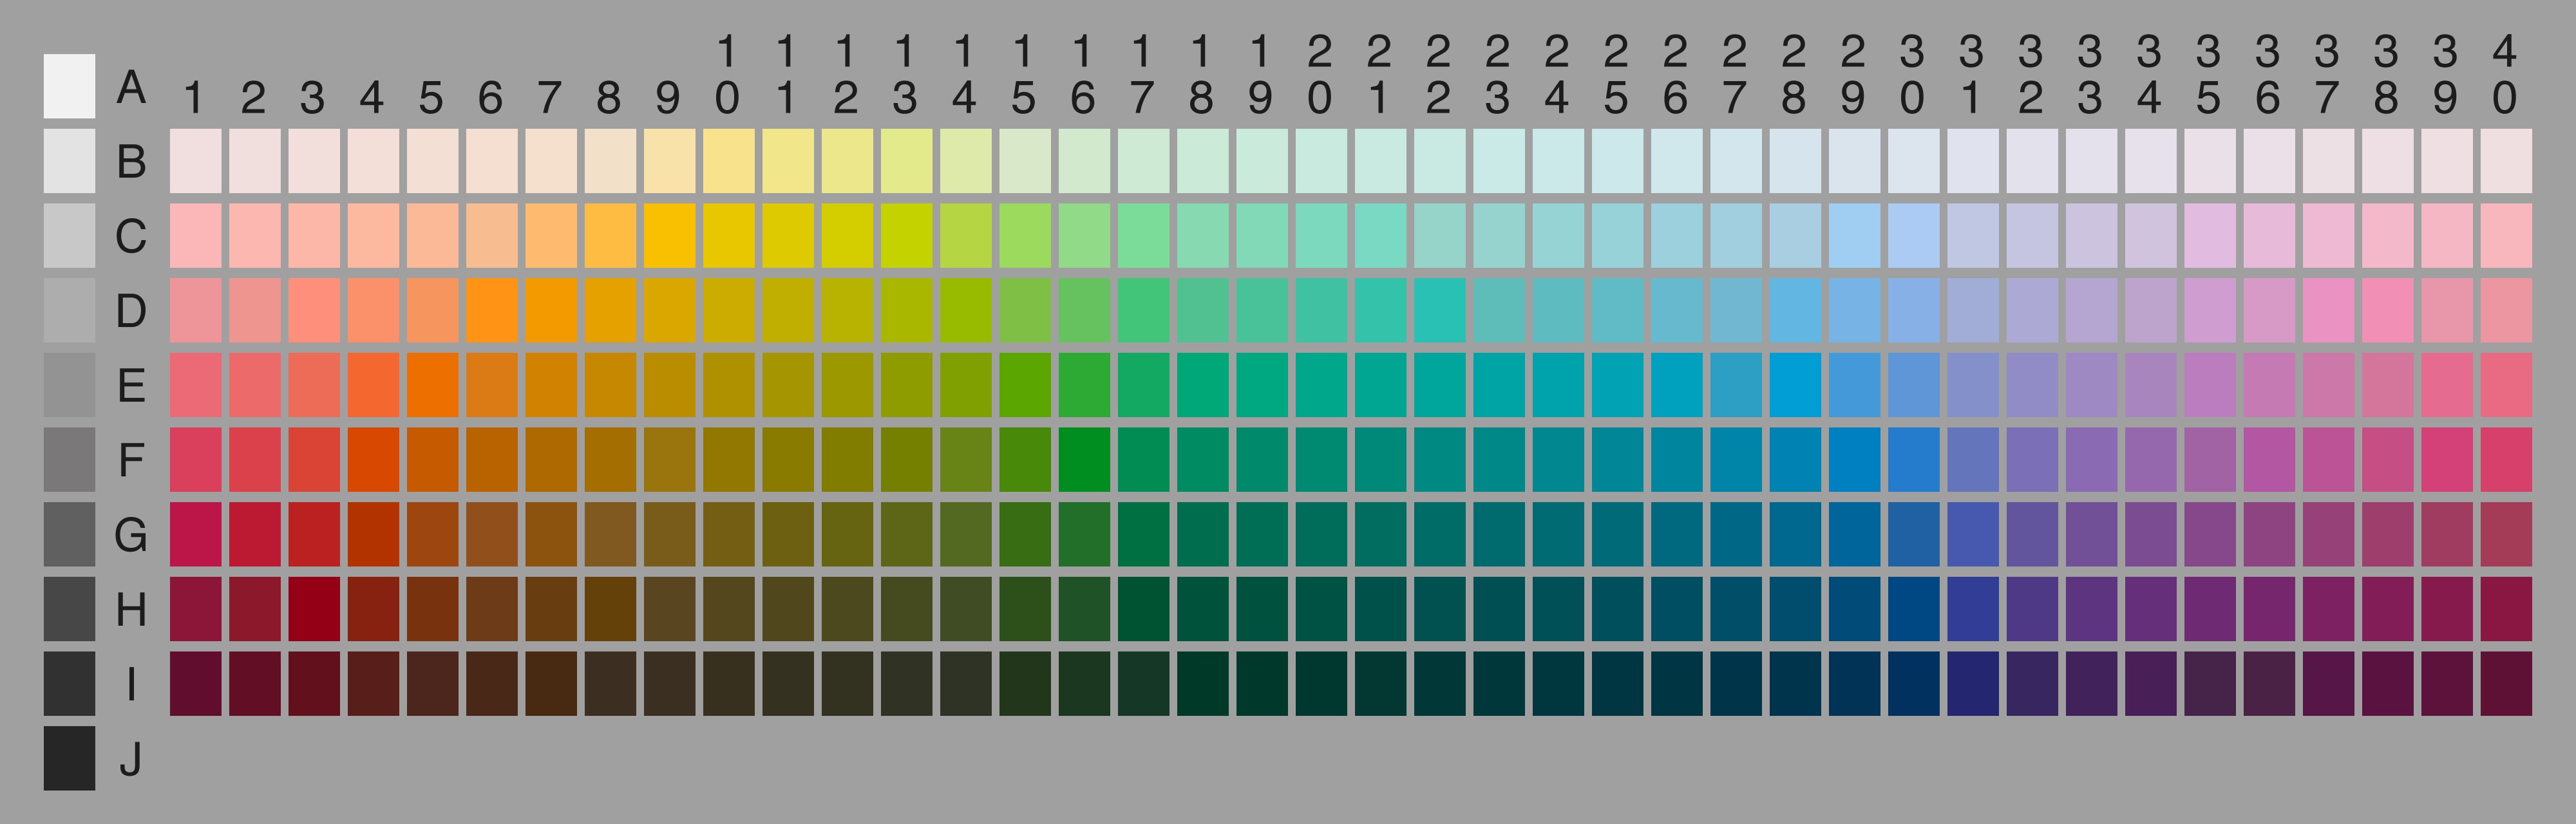 Colour classification (IEKO)